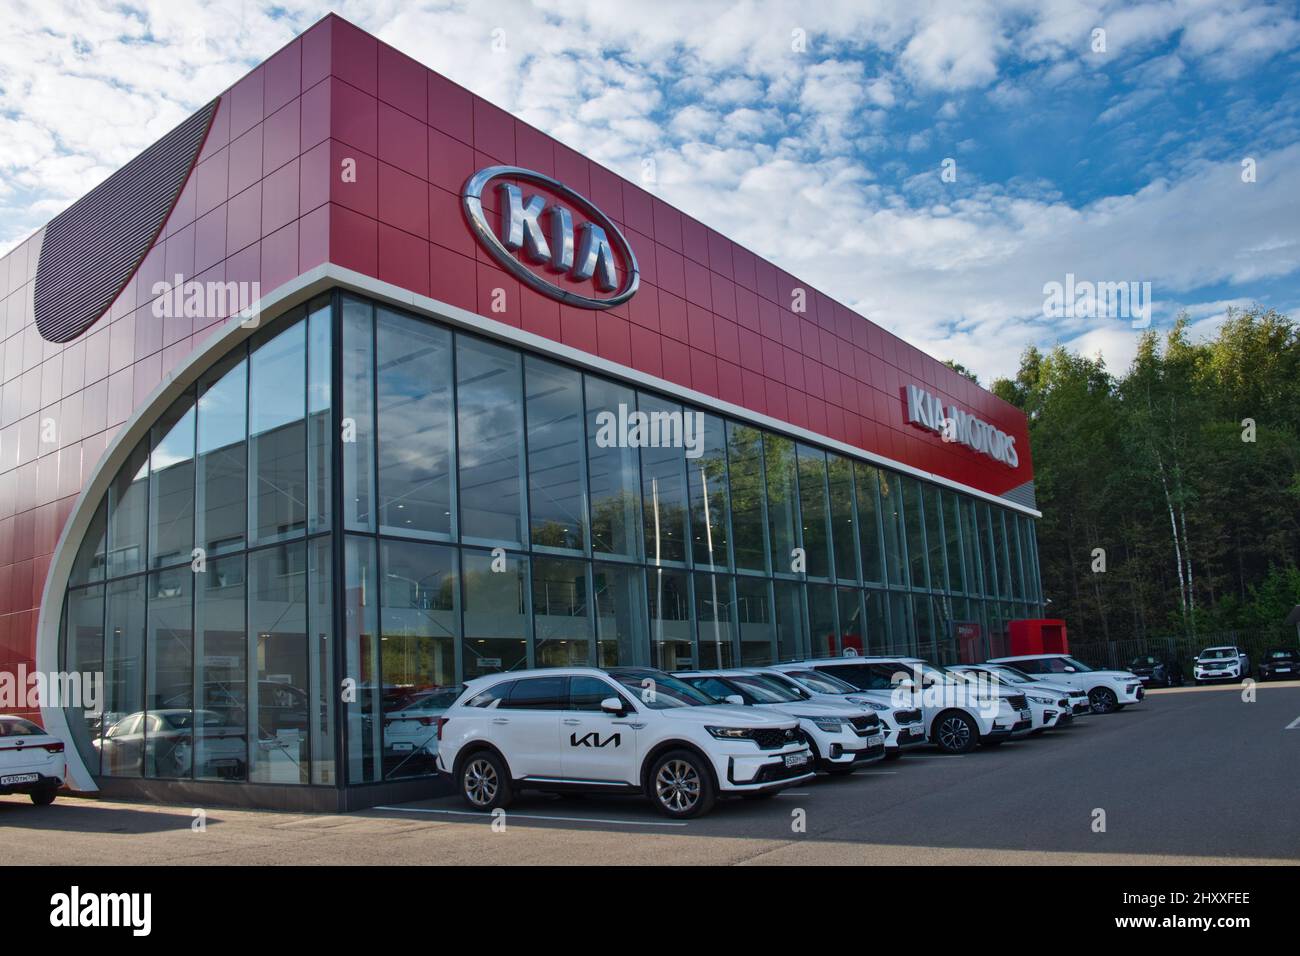 Moscow Region, Russia - September 2021: Building of KIA MOTORS car selling and service center. KIA logo and KIA MOTORS text on car showroom. Stock Photo